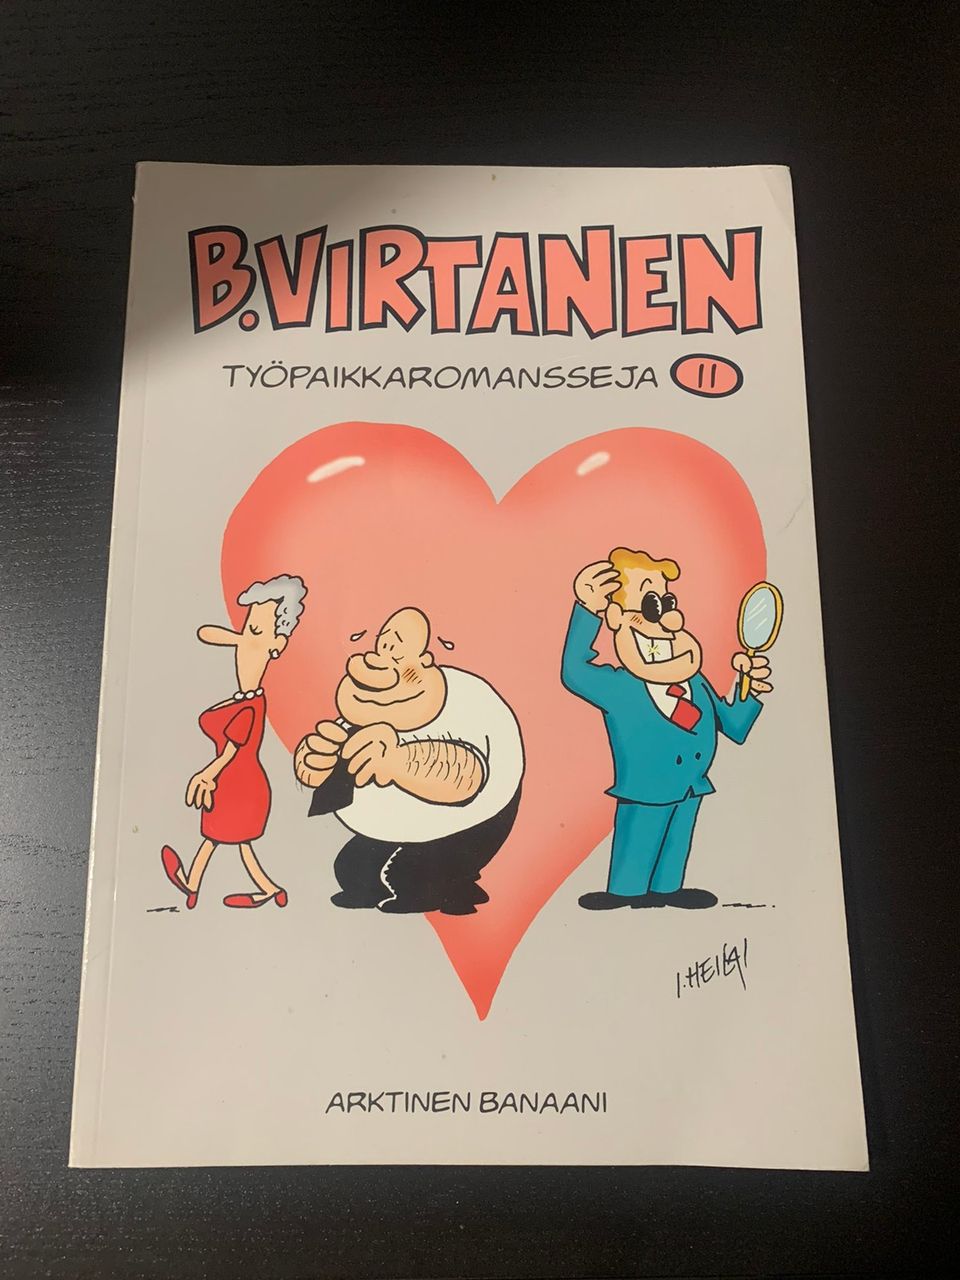 B. Virtanen signeerattu